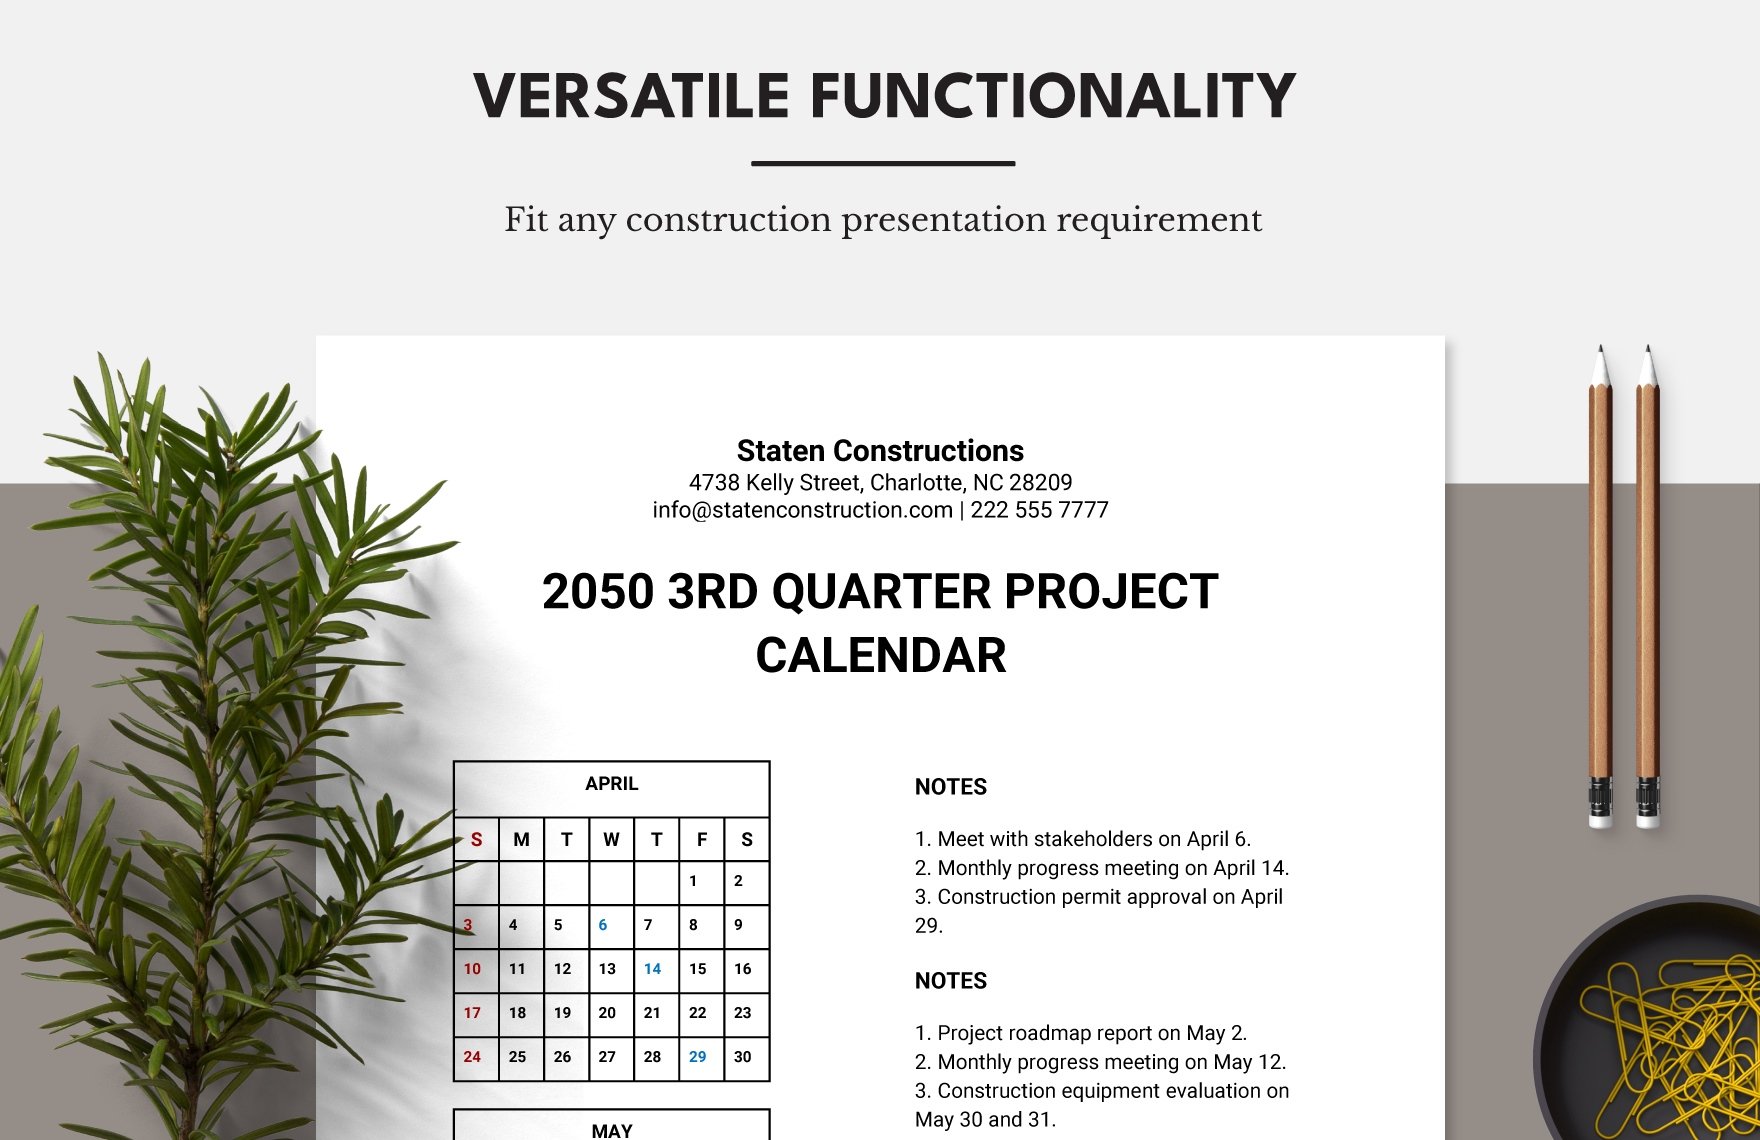 Project Planning Calendar Template